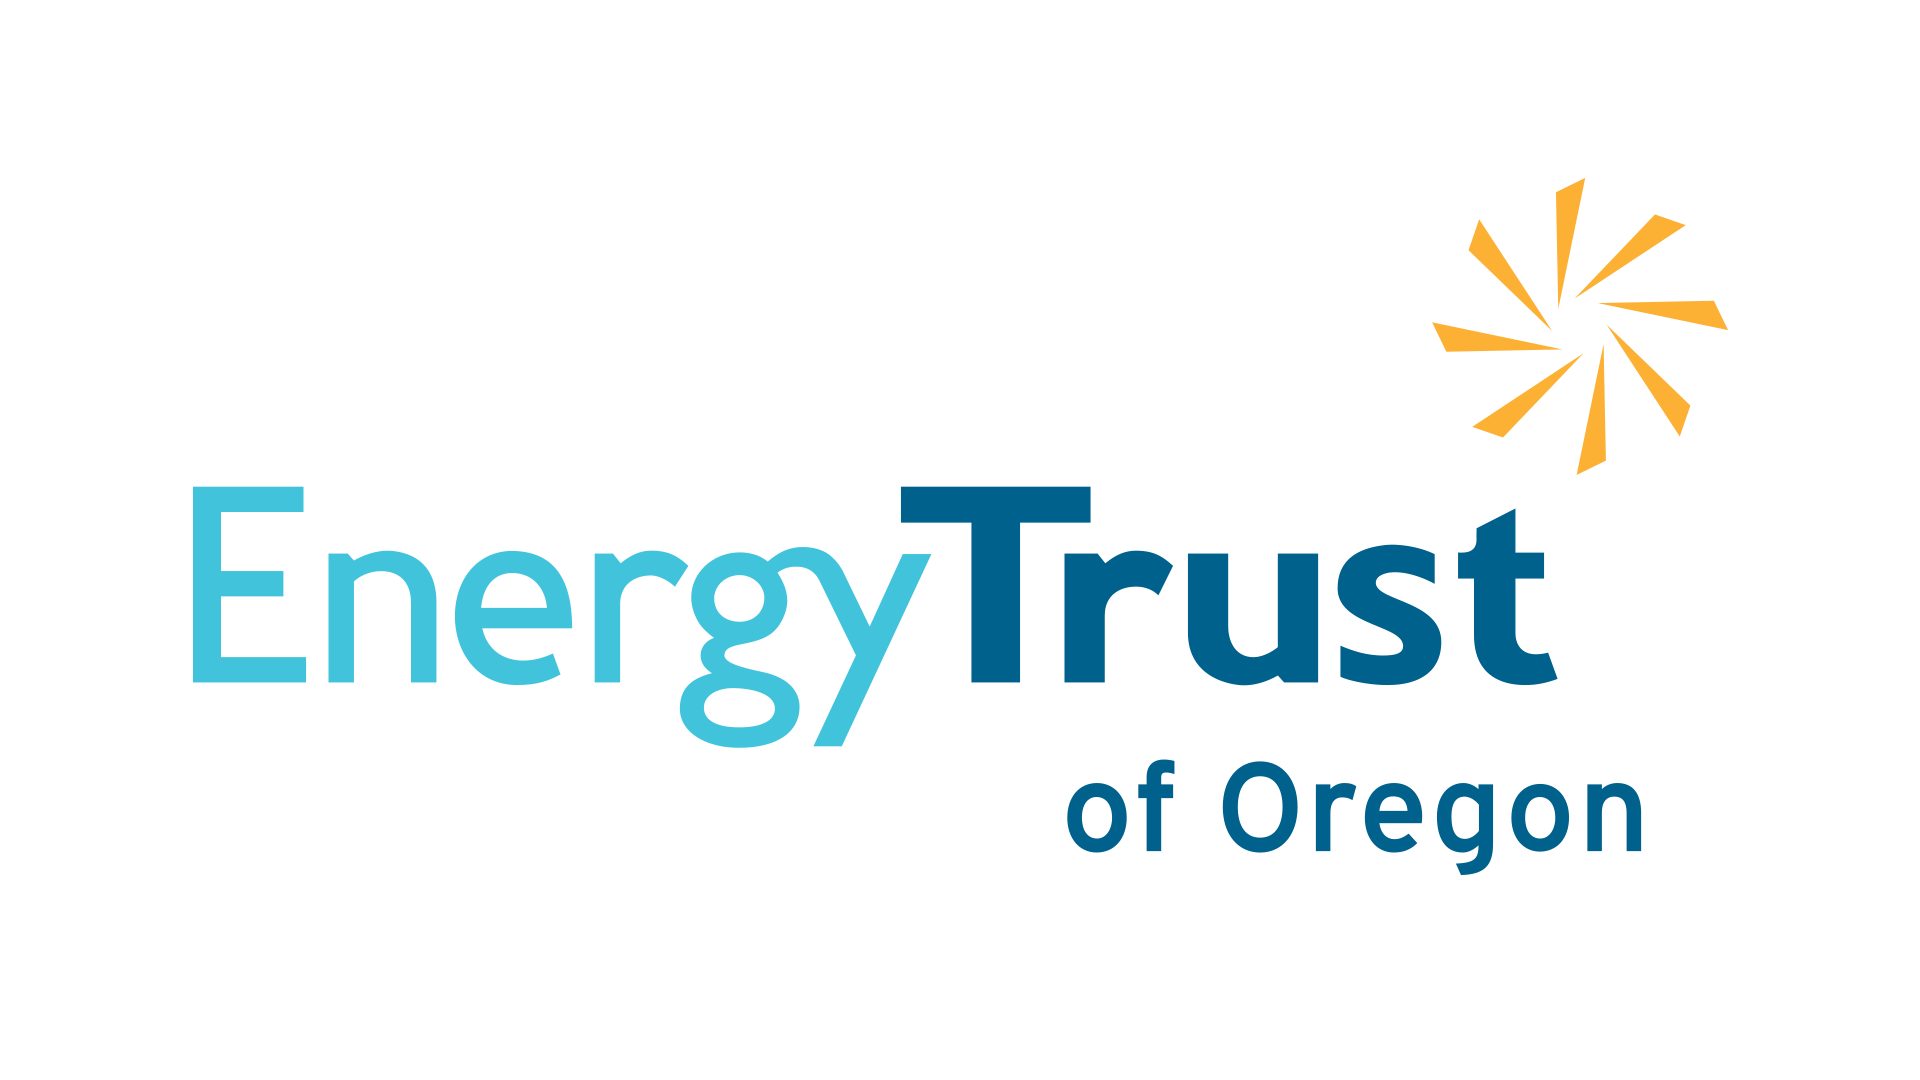 Energy Trust of Oregon logo